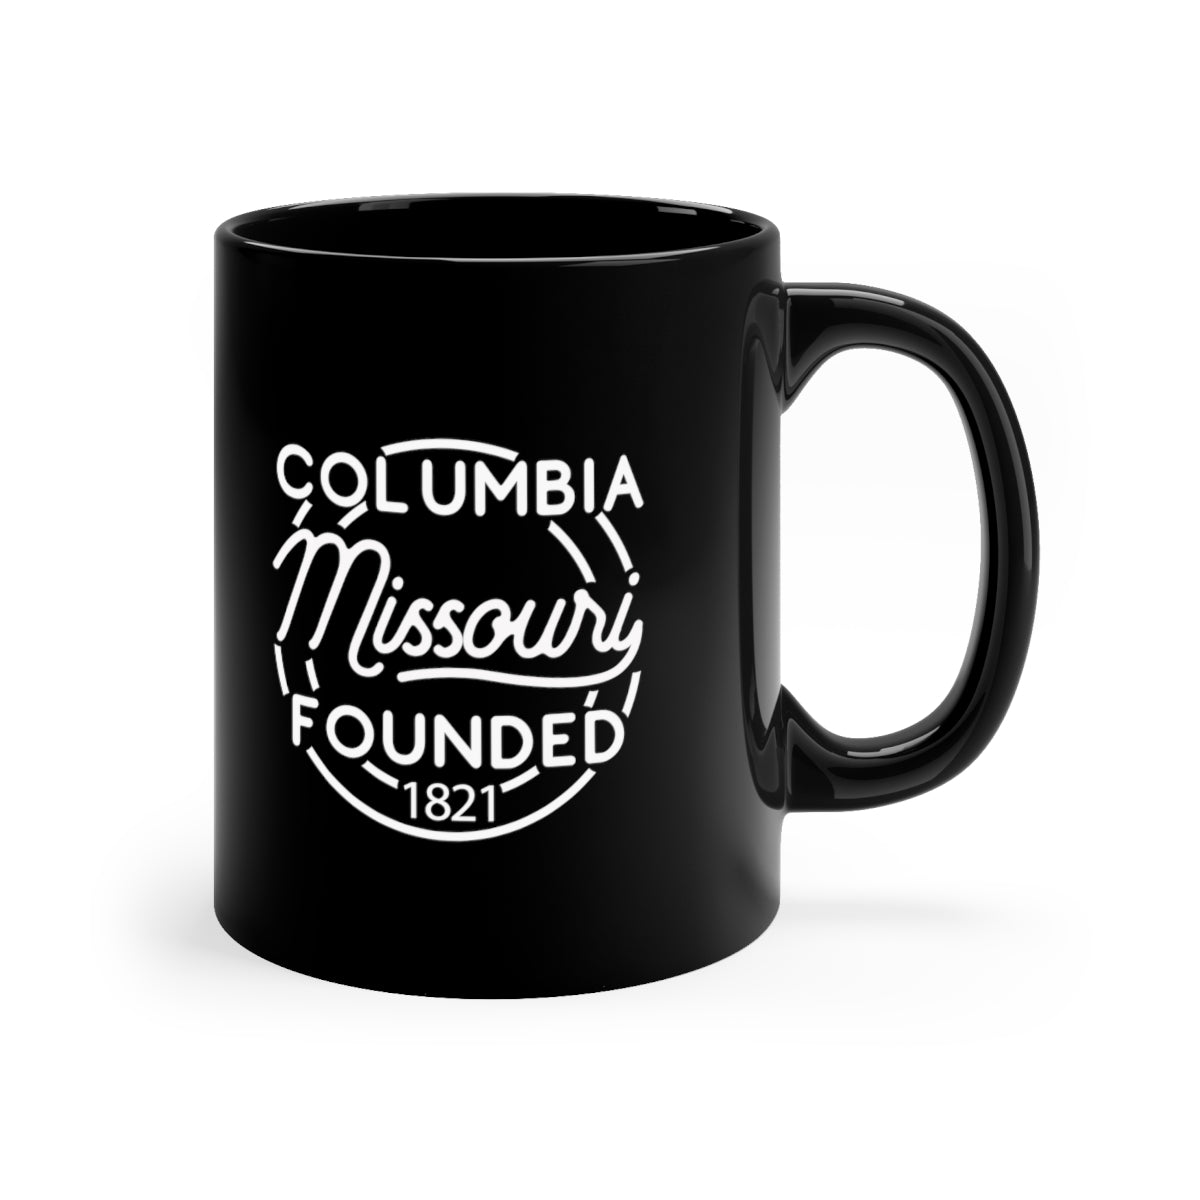 11oz black ceramic mug for Columbia, Missouri Side view